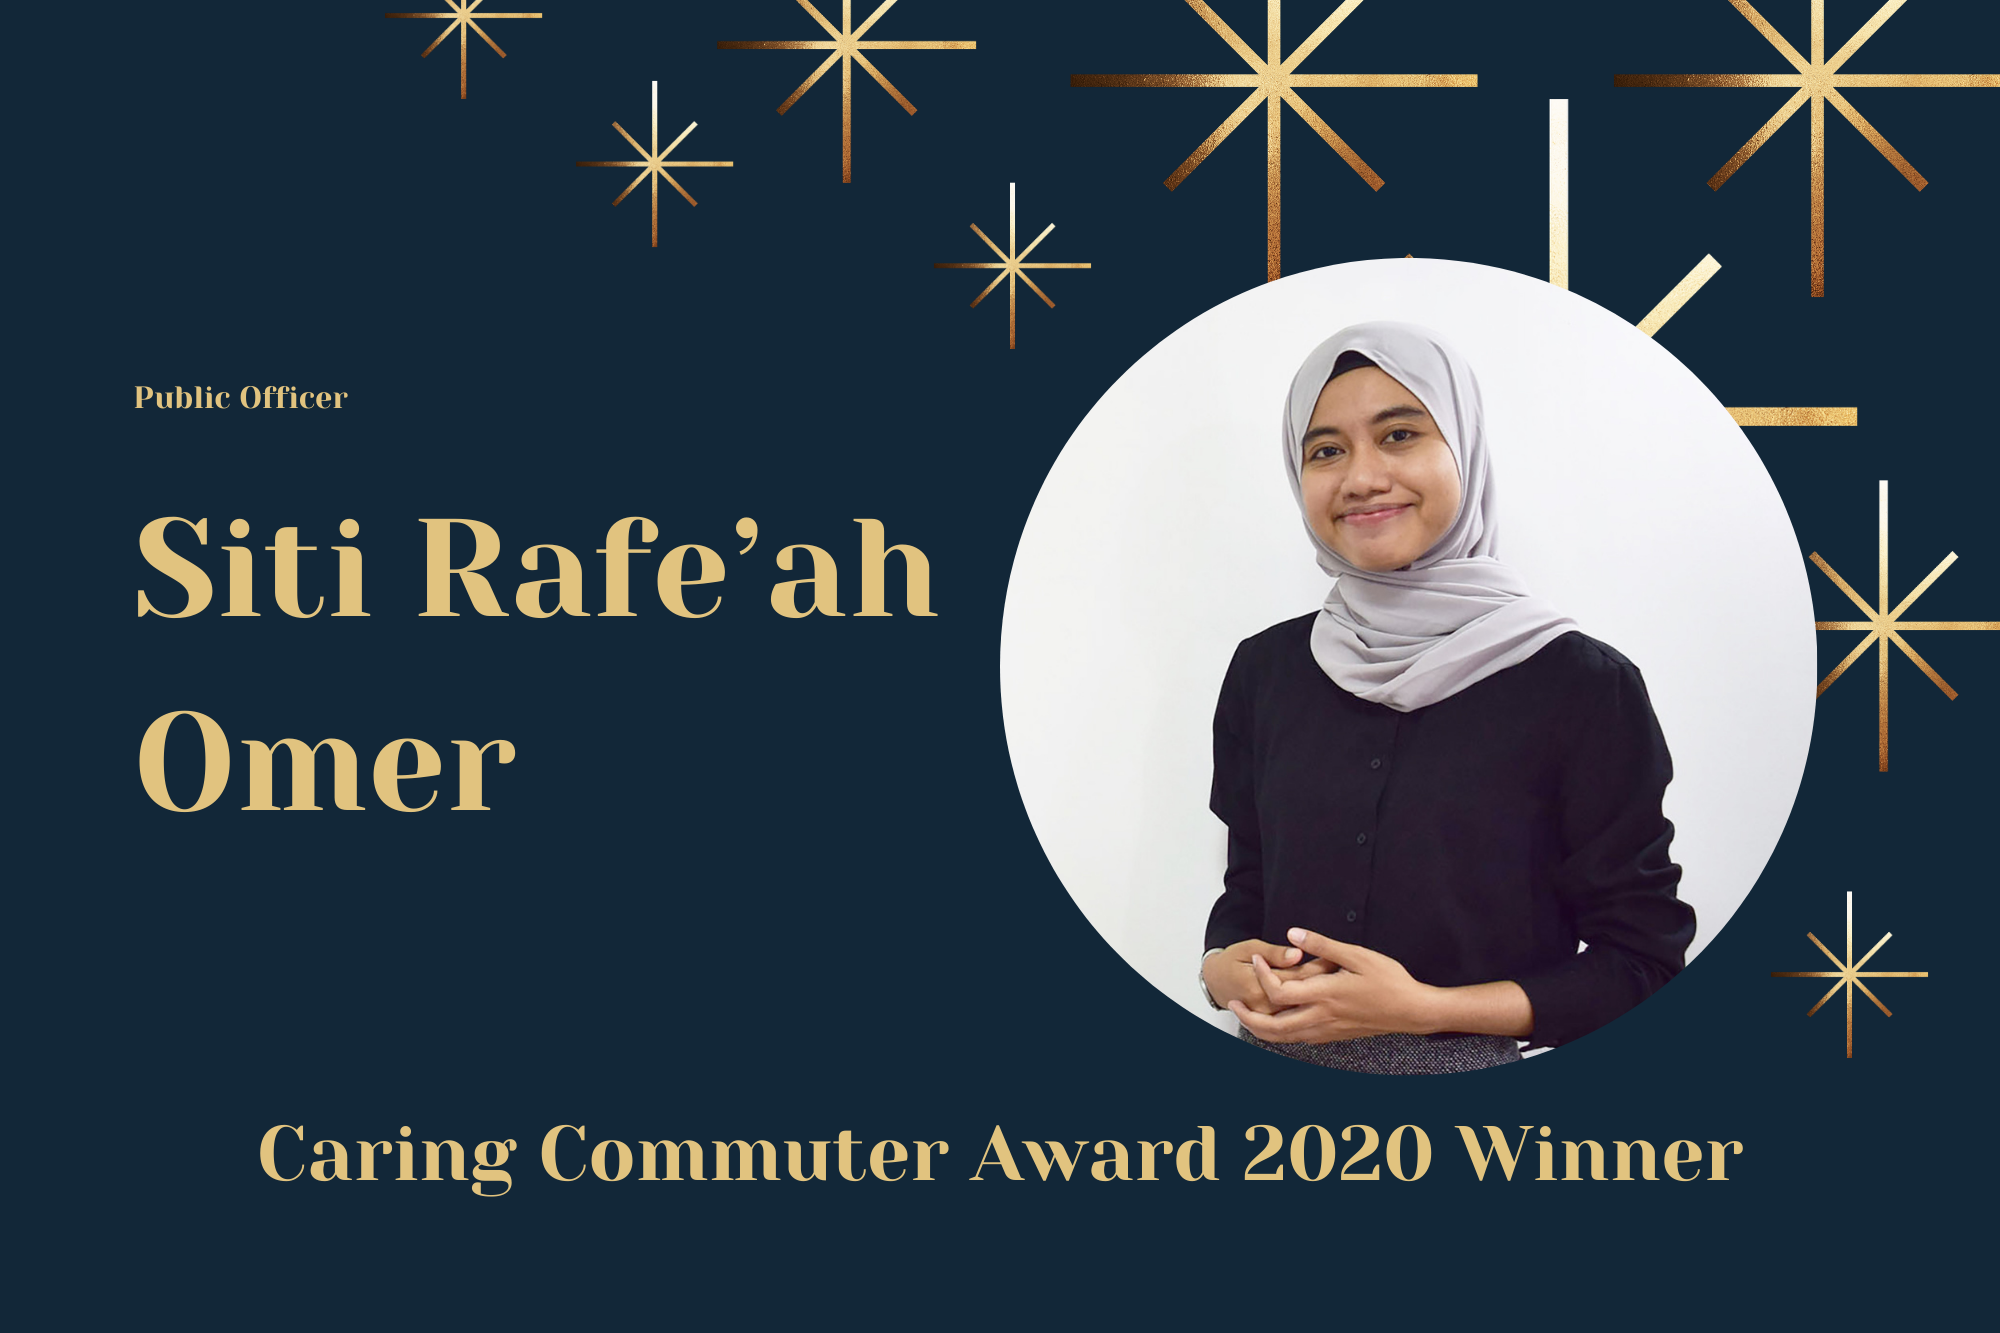 Meet Rafe'ah, Undergraduate and Caring Commuter Award 2020 Winner